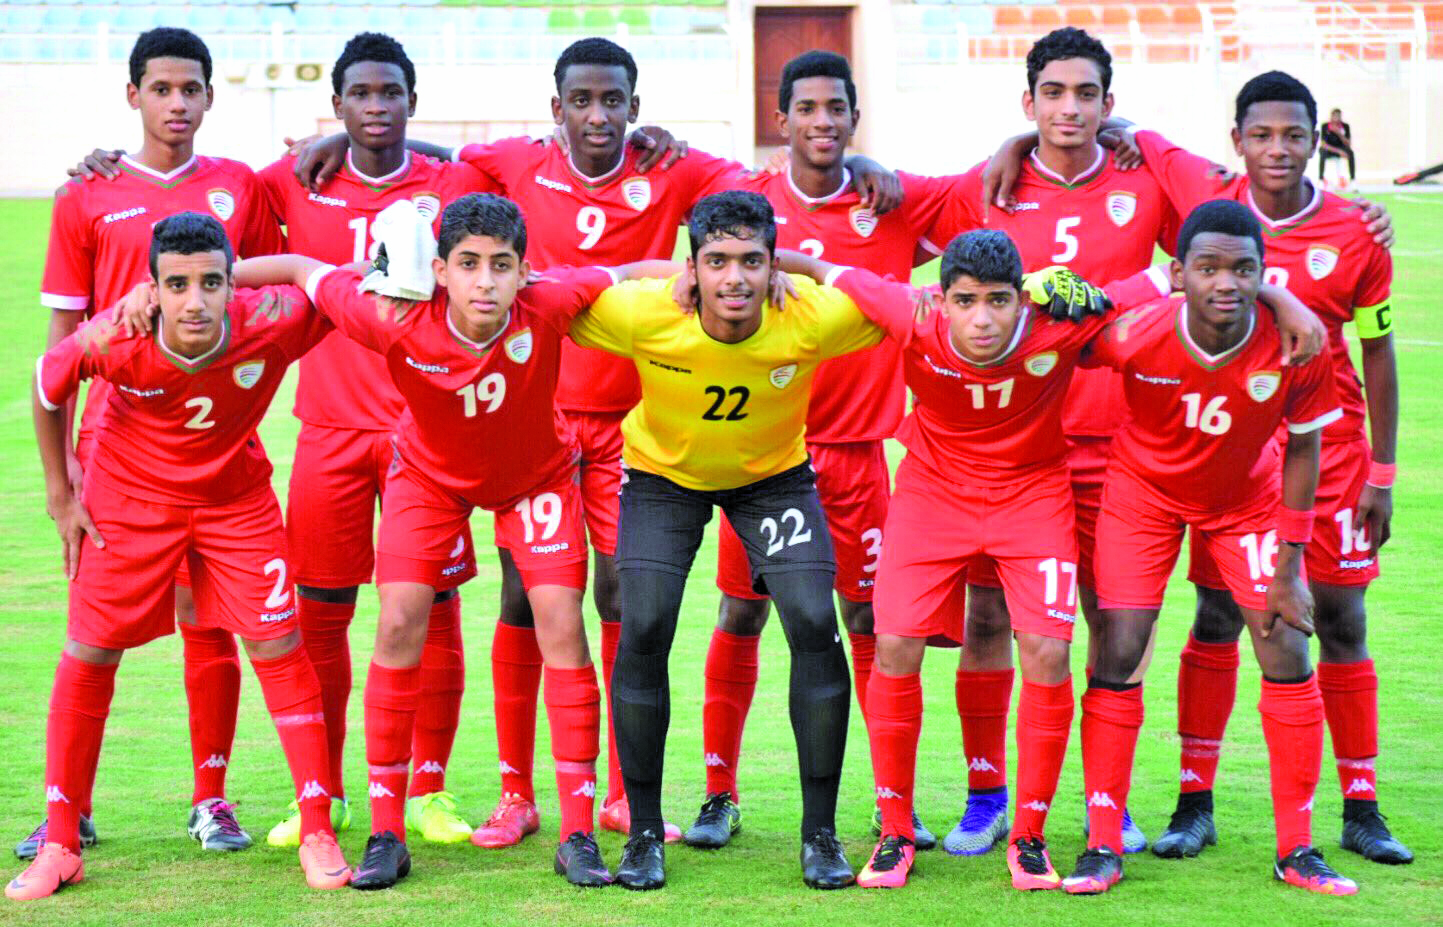 AFC U-16 championship: Oman one step away from clinching U-17 World Cup berth